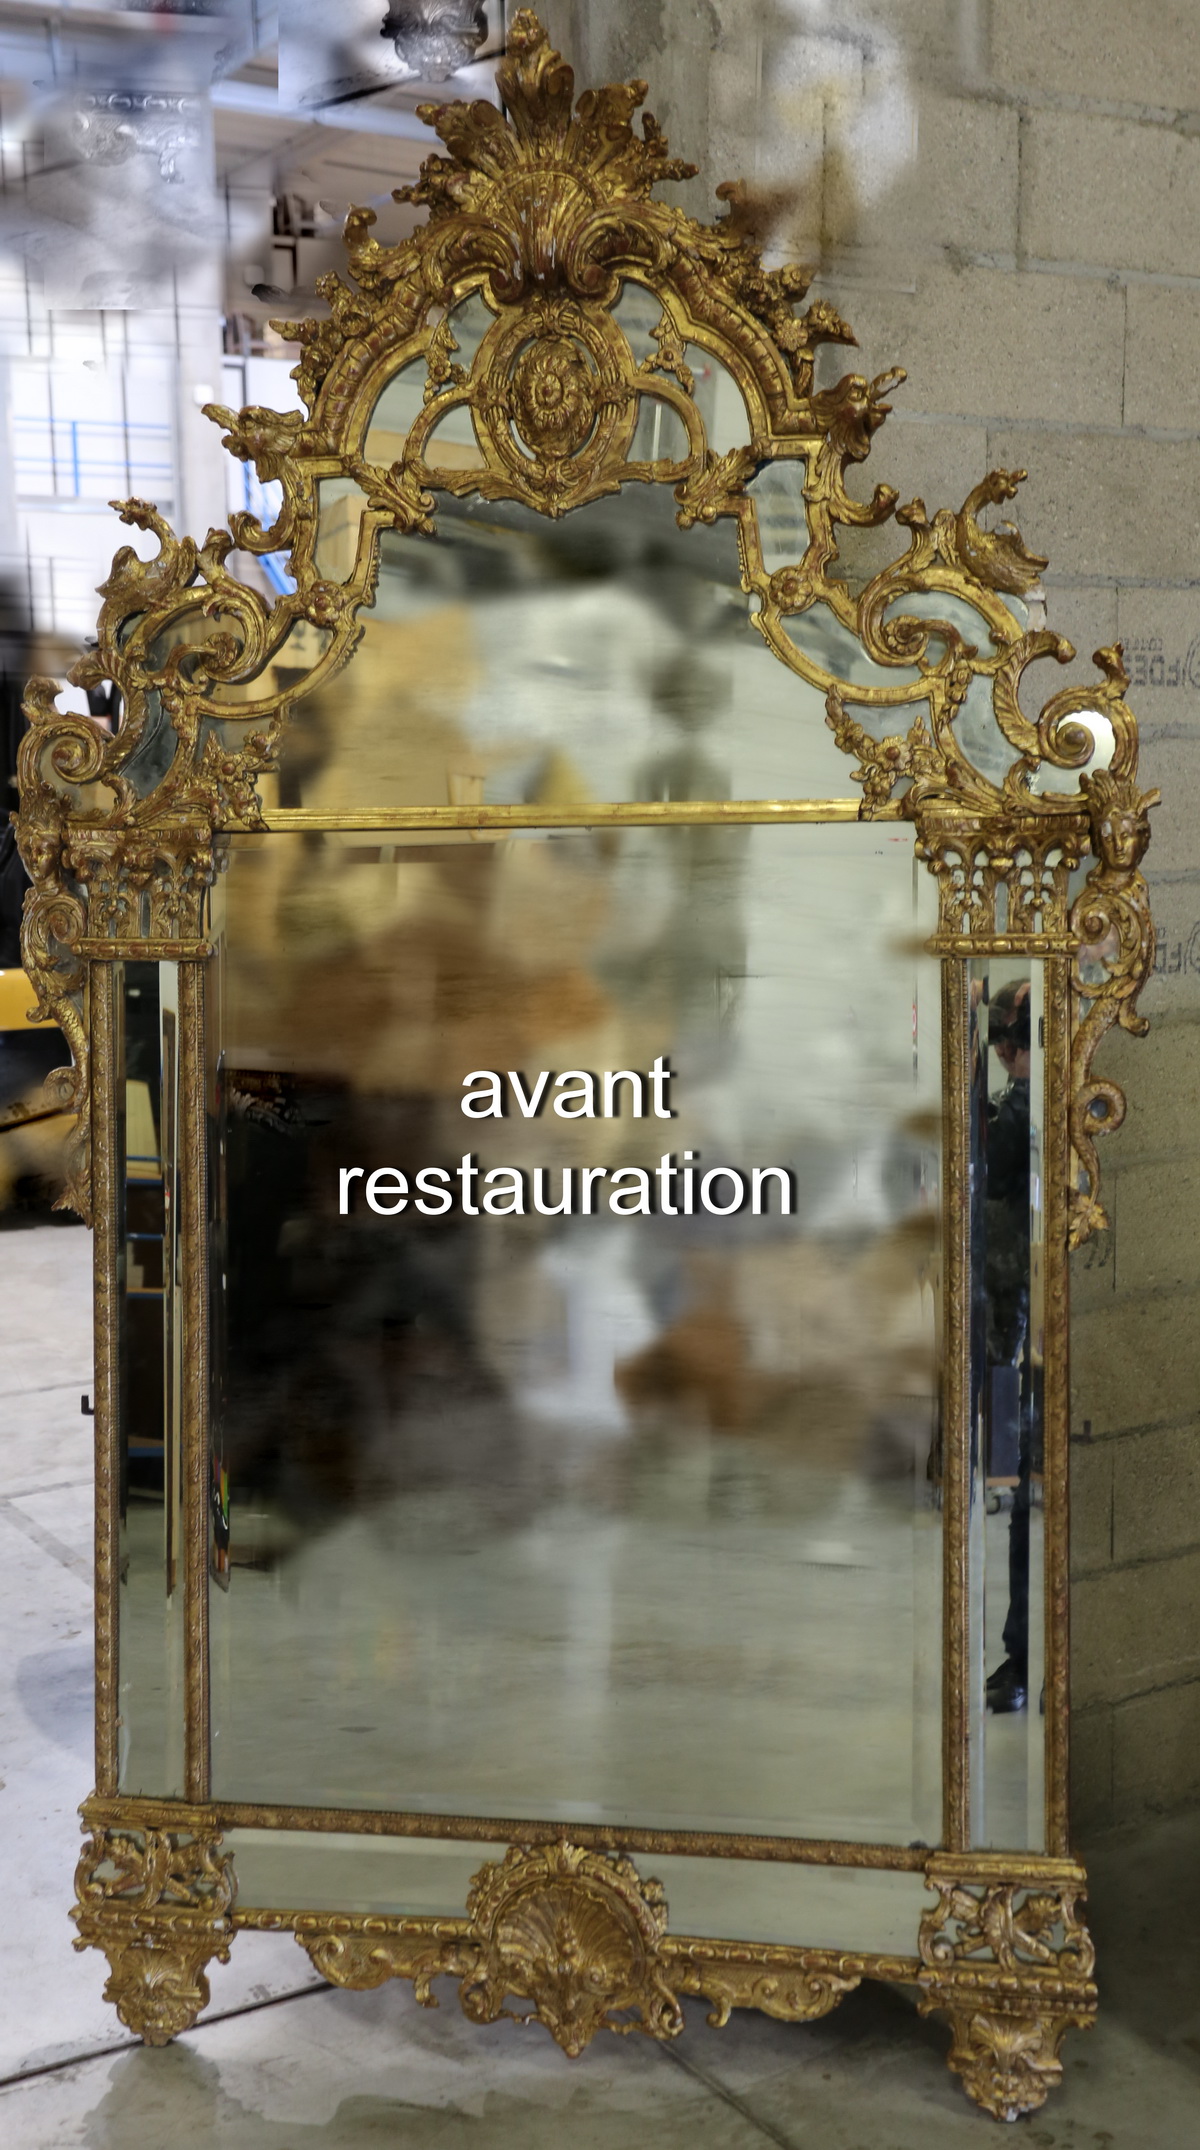 Miroir époque Régence